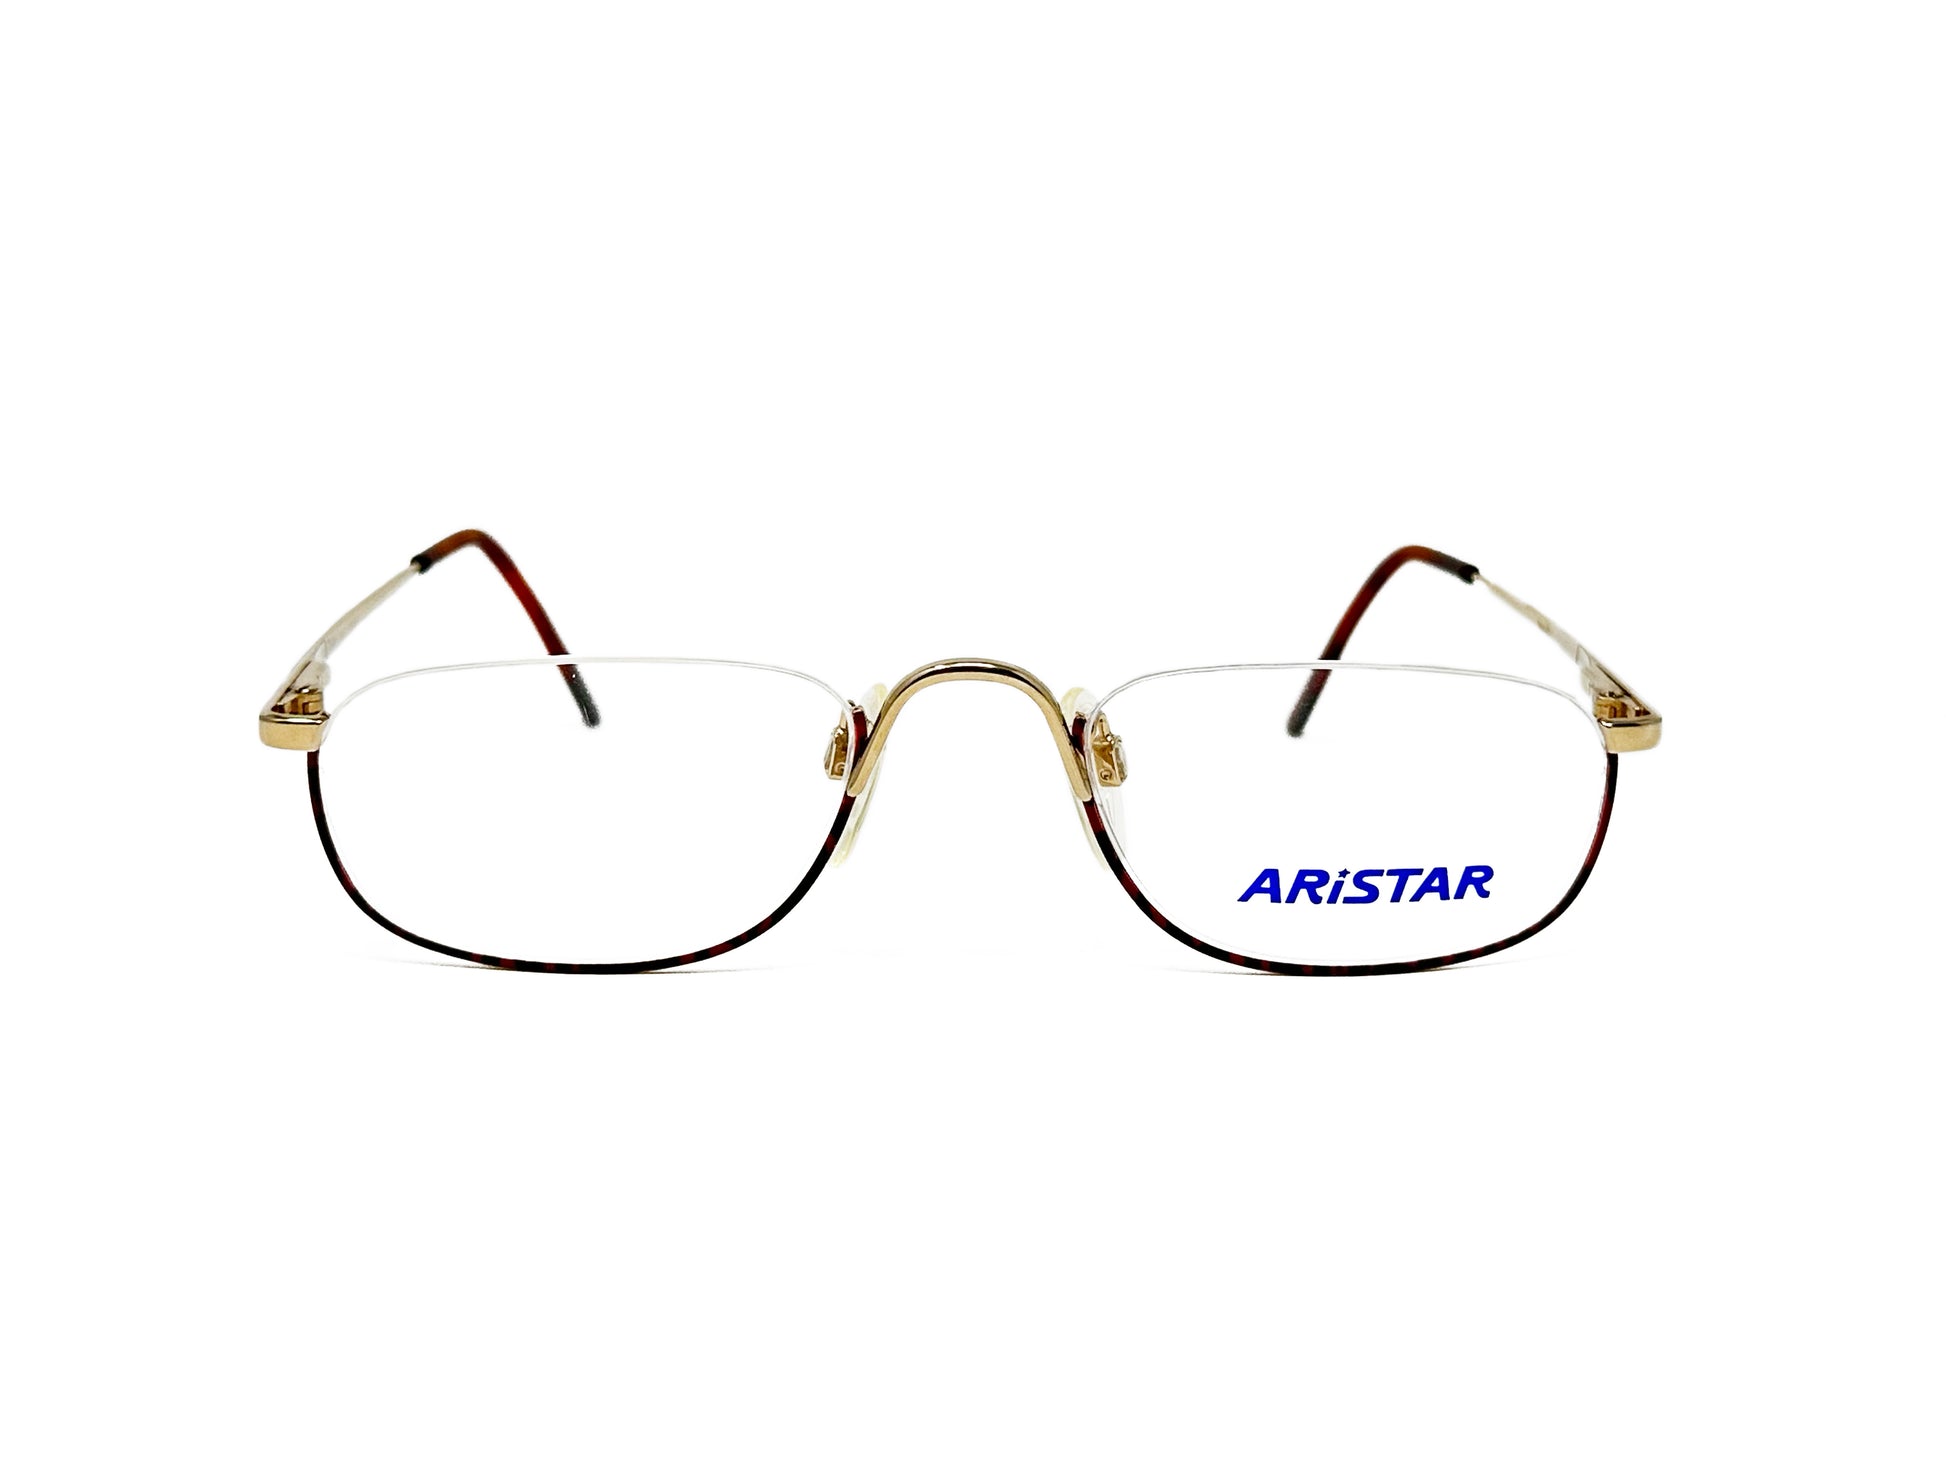 Aristar rounded-rectamgular, half-rim optical frame. Model: 6651. Color: 016 -Gold metal with black trim. Front view. 